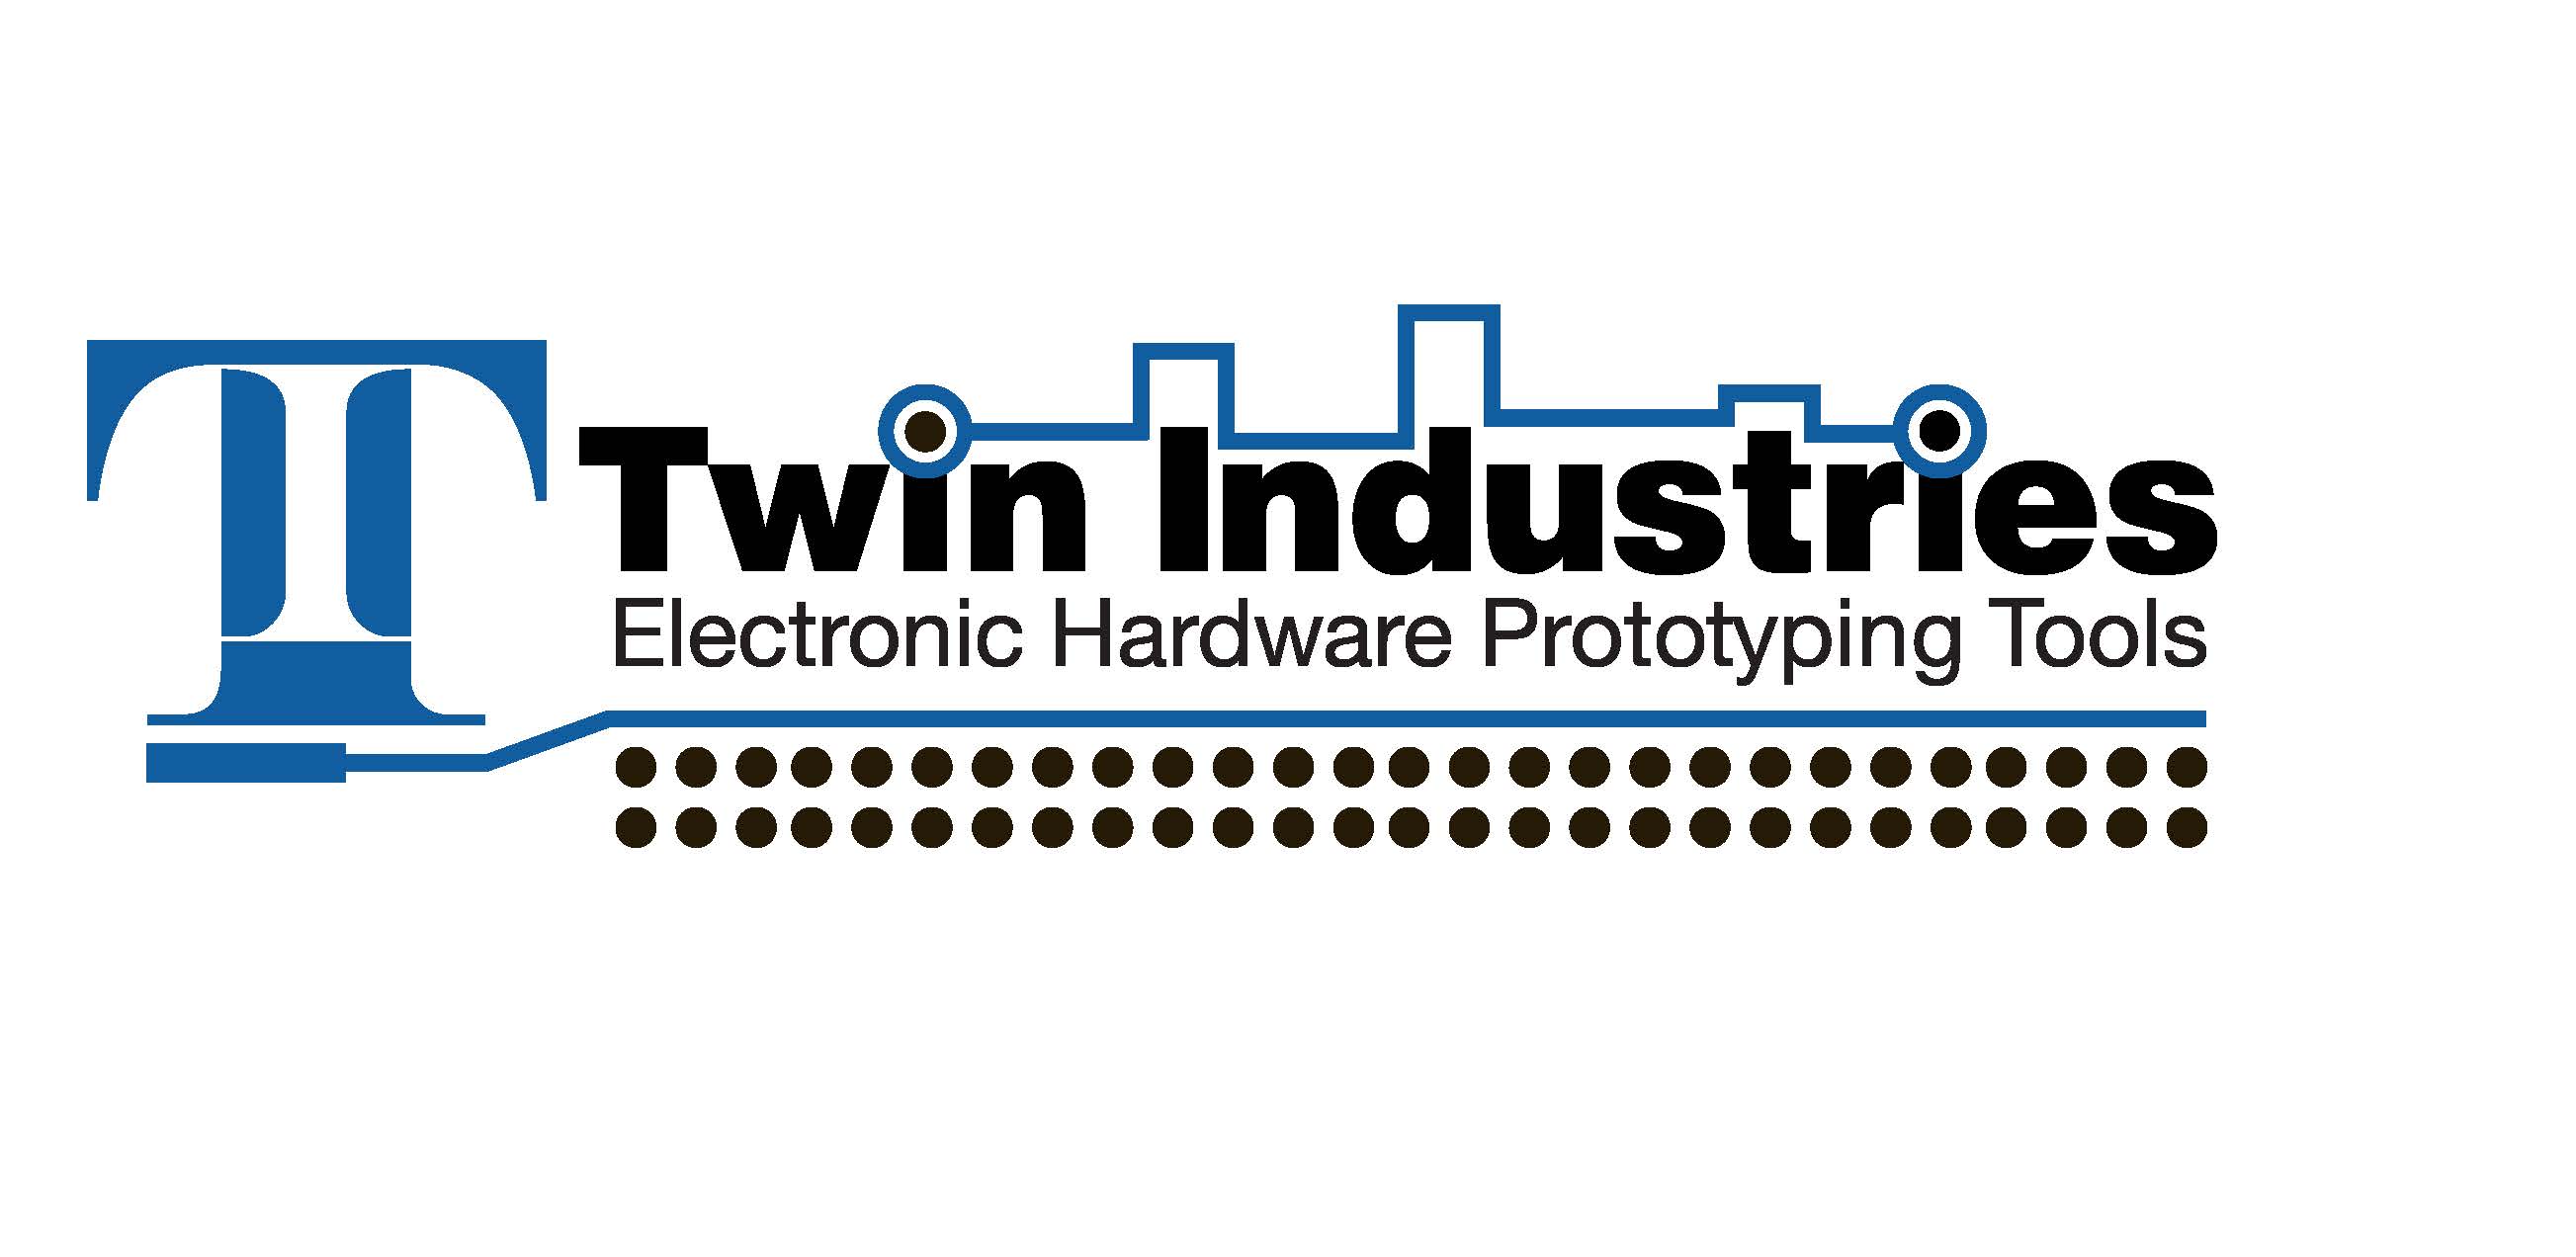 Twin Industries